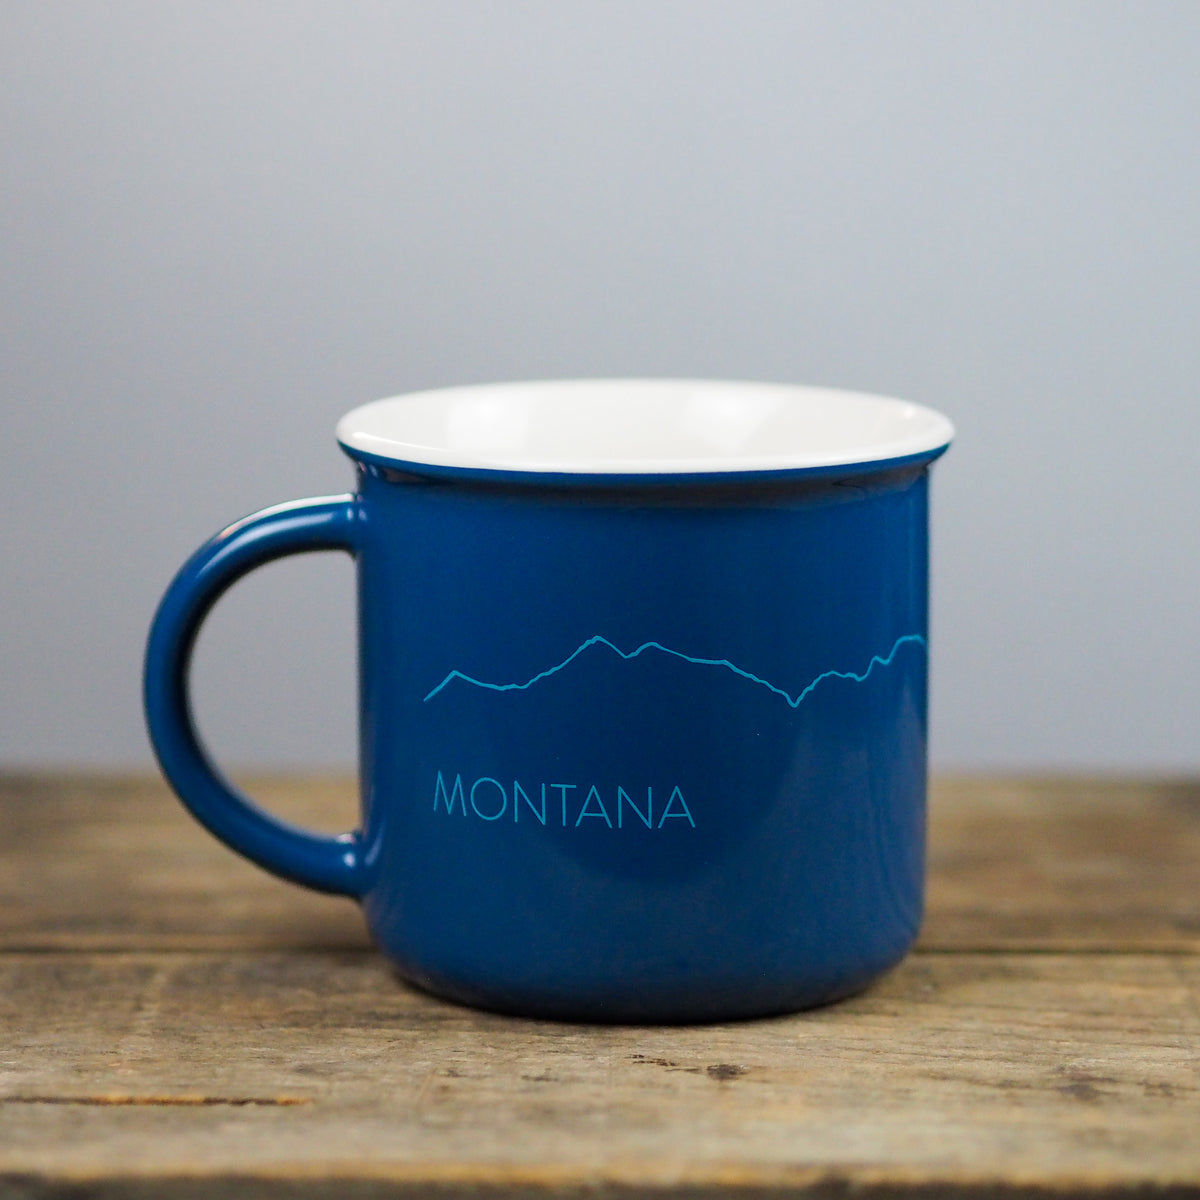 Montana Mountain Range Mug - MONTANA SHIRT CO.